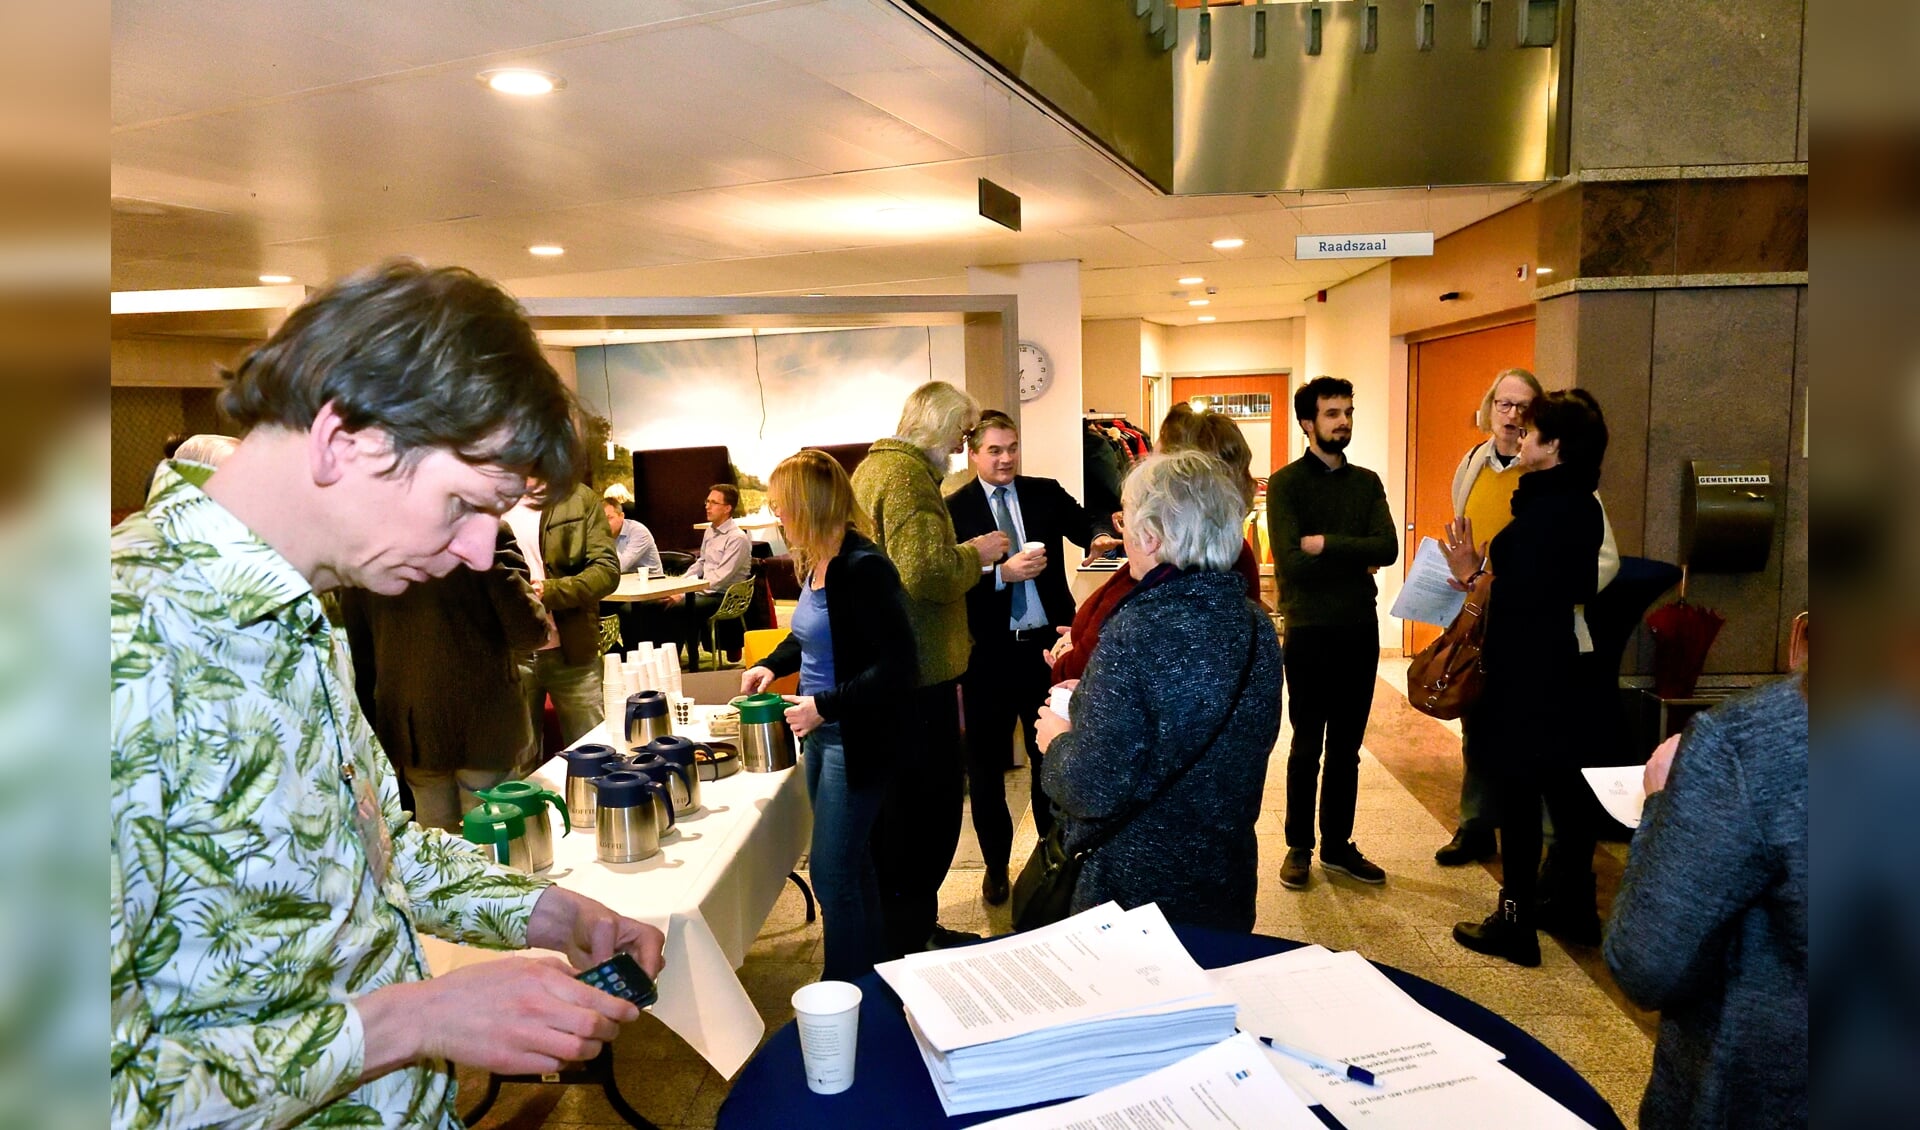 Discussie in gemeentehuis Diemen over biomassacentrale in de achtertuin. Foto: Trudy Kroese